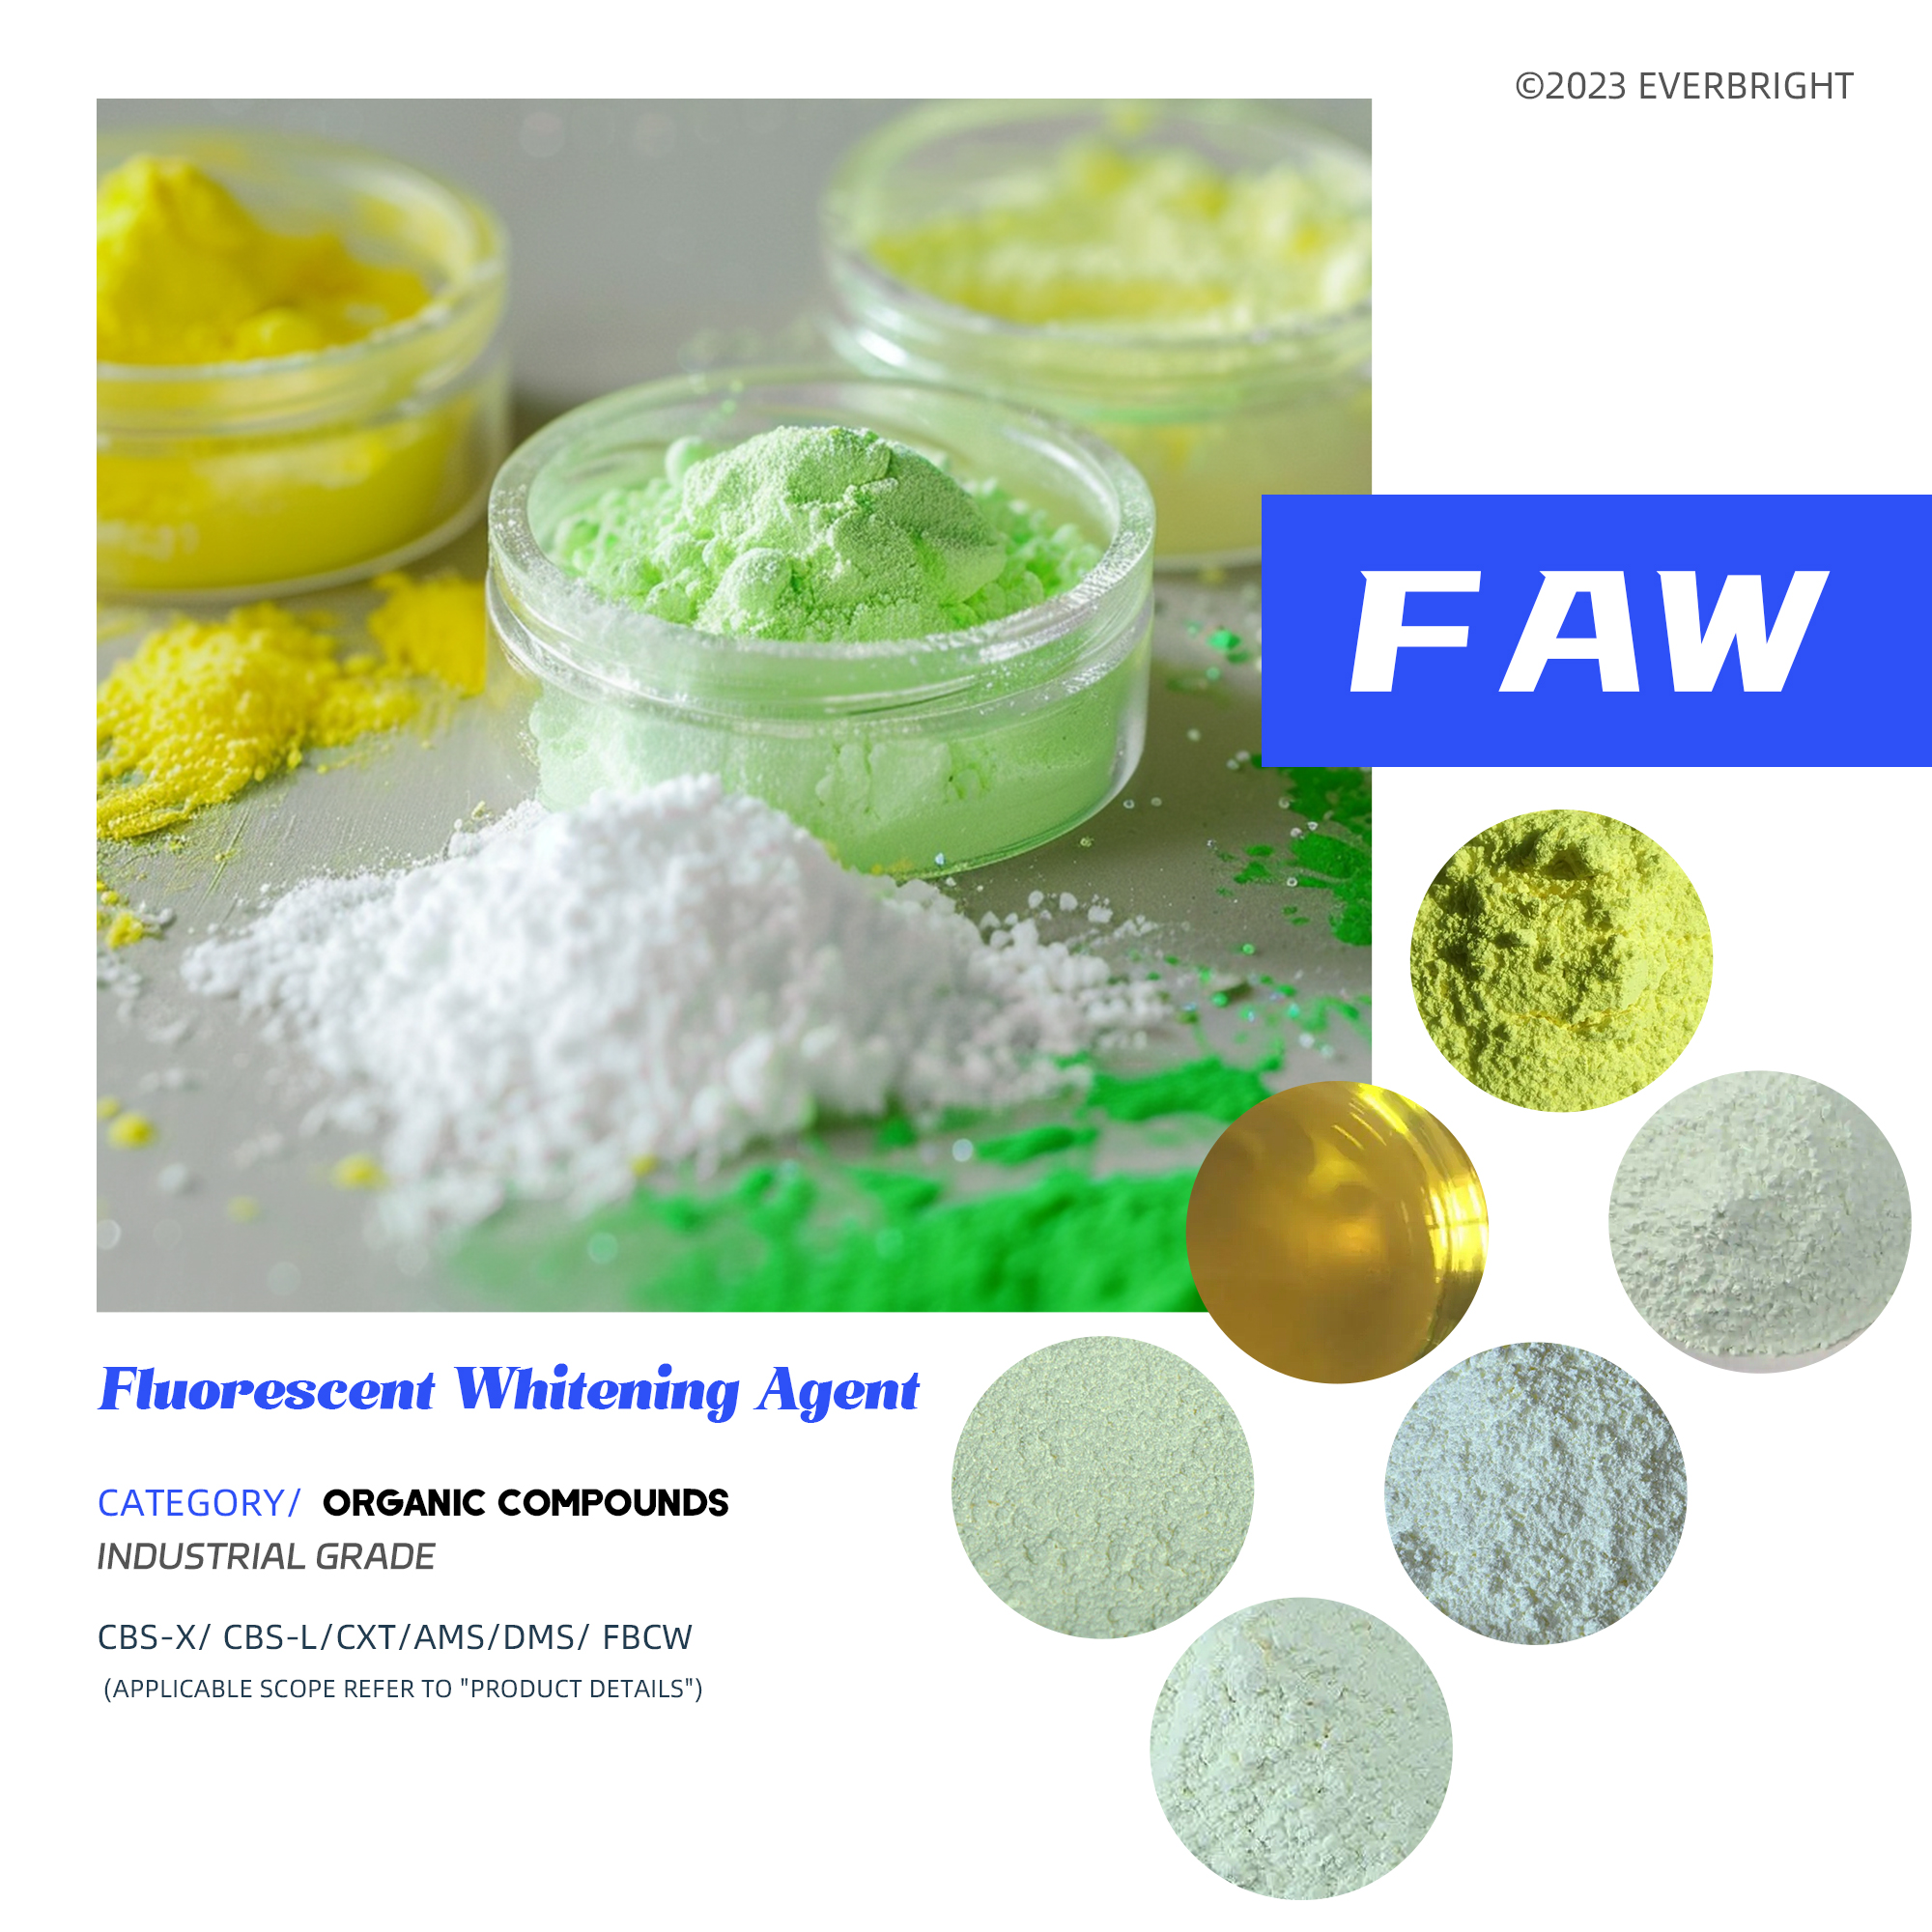 Fluorescent Whitening Agent (FWA)